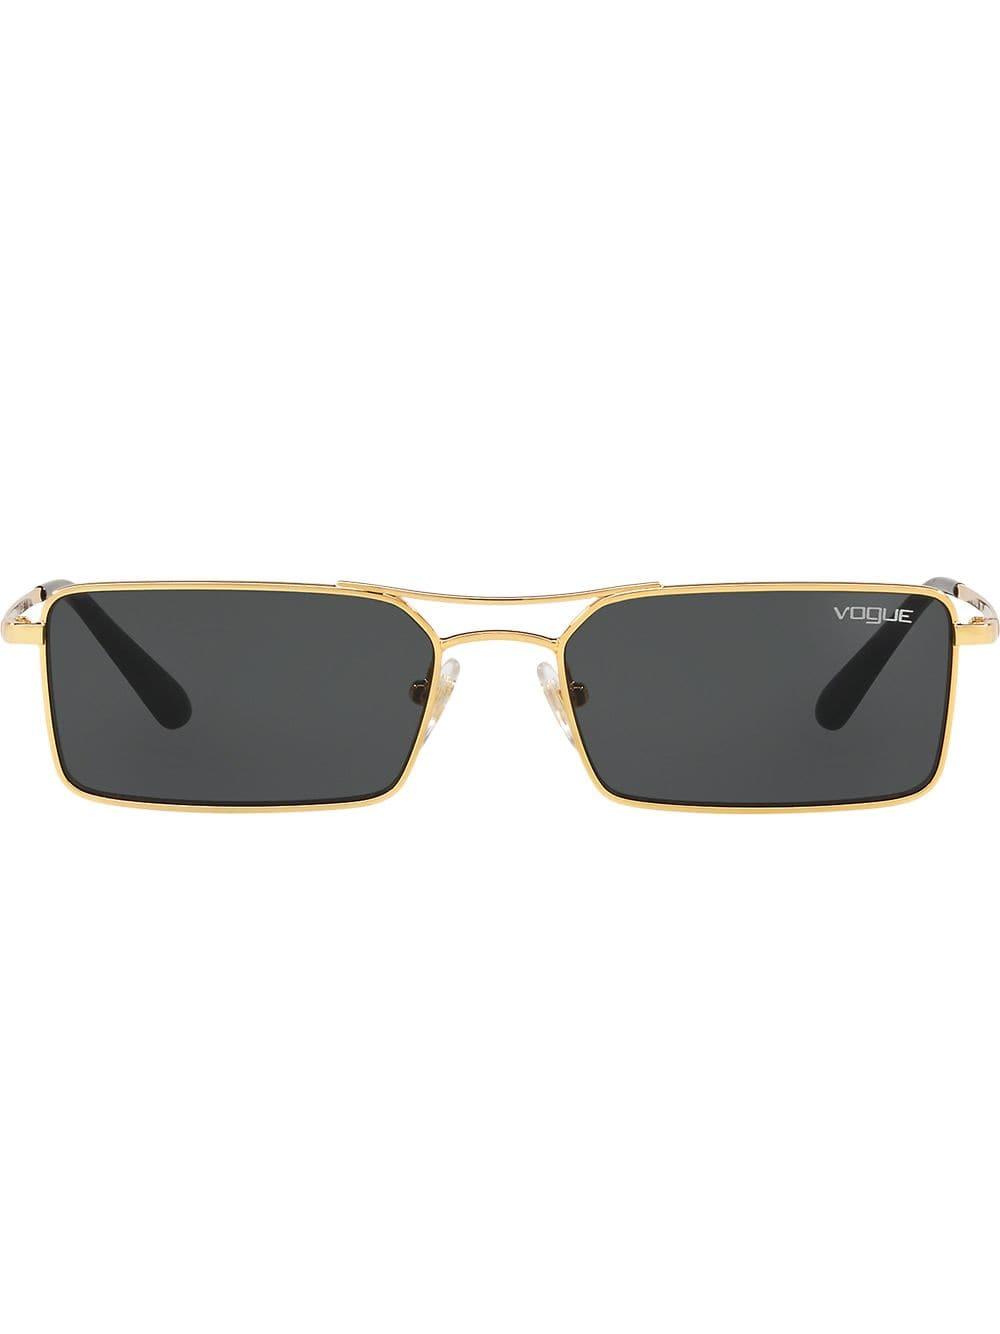 Vogue Eyewear Gigi Hadid Capsule Square Shaped Sunglasses in Metallic |  Lyst Canada